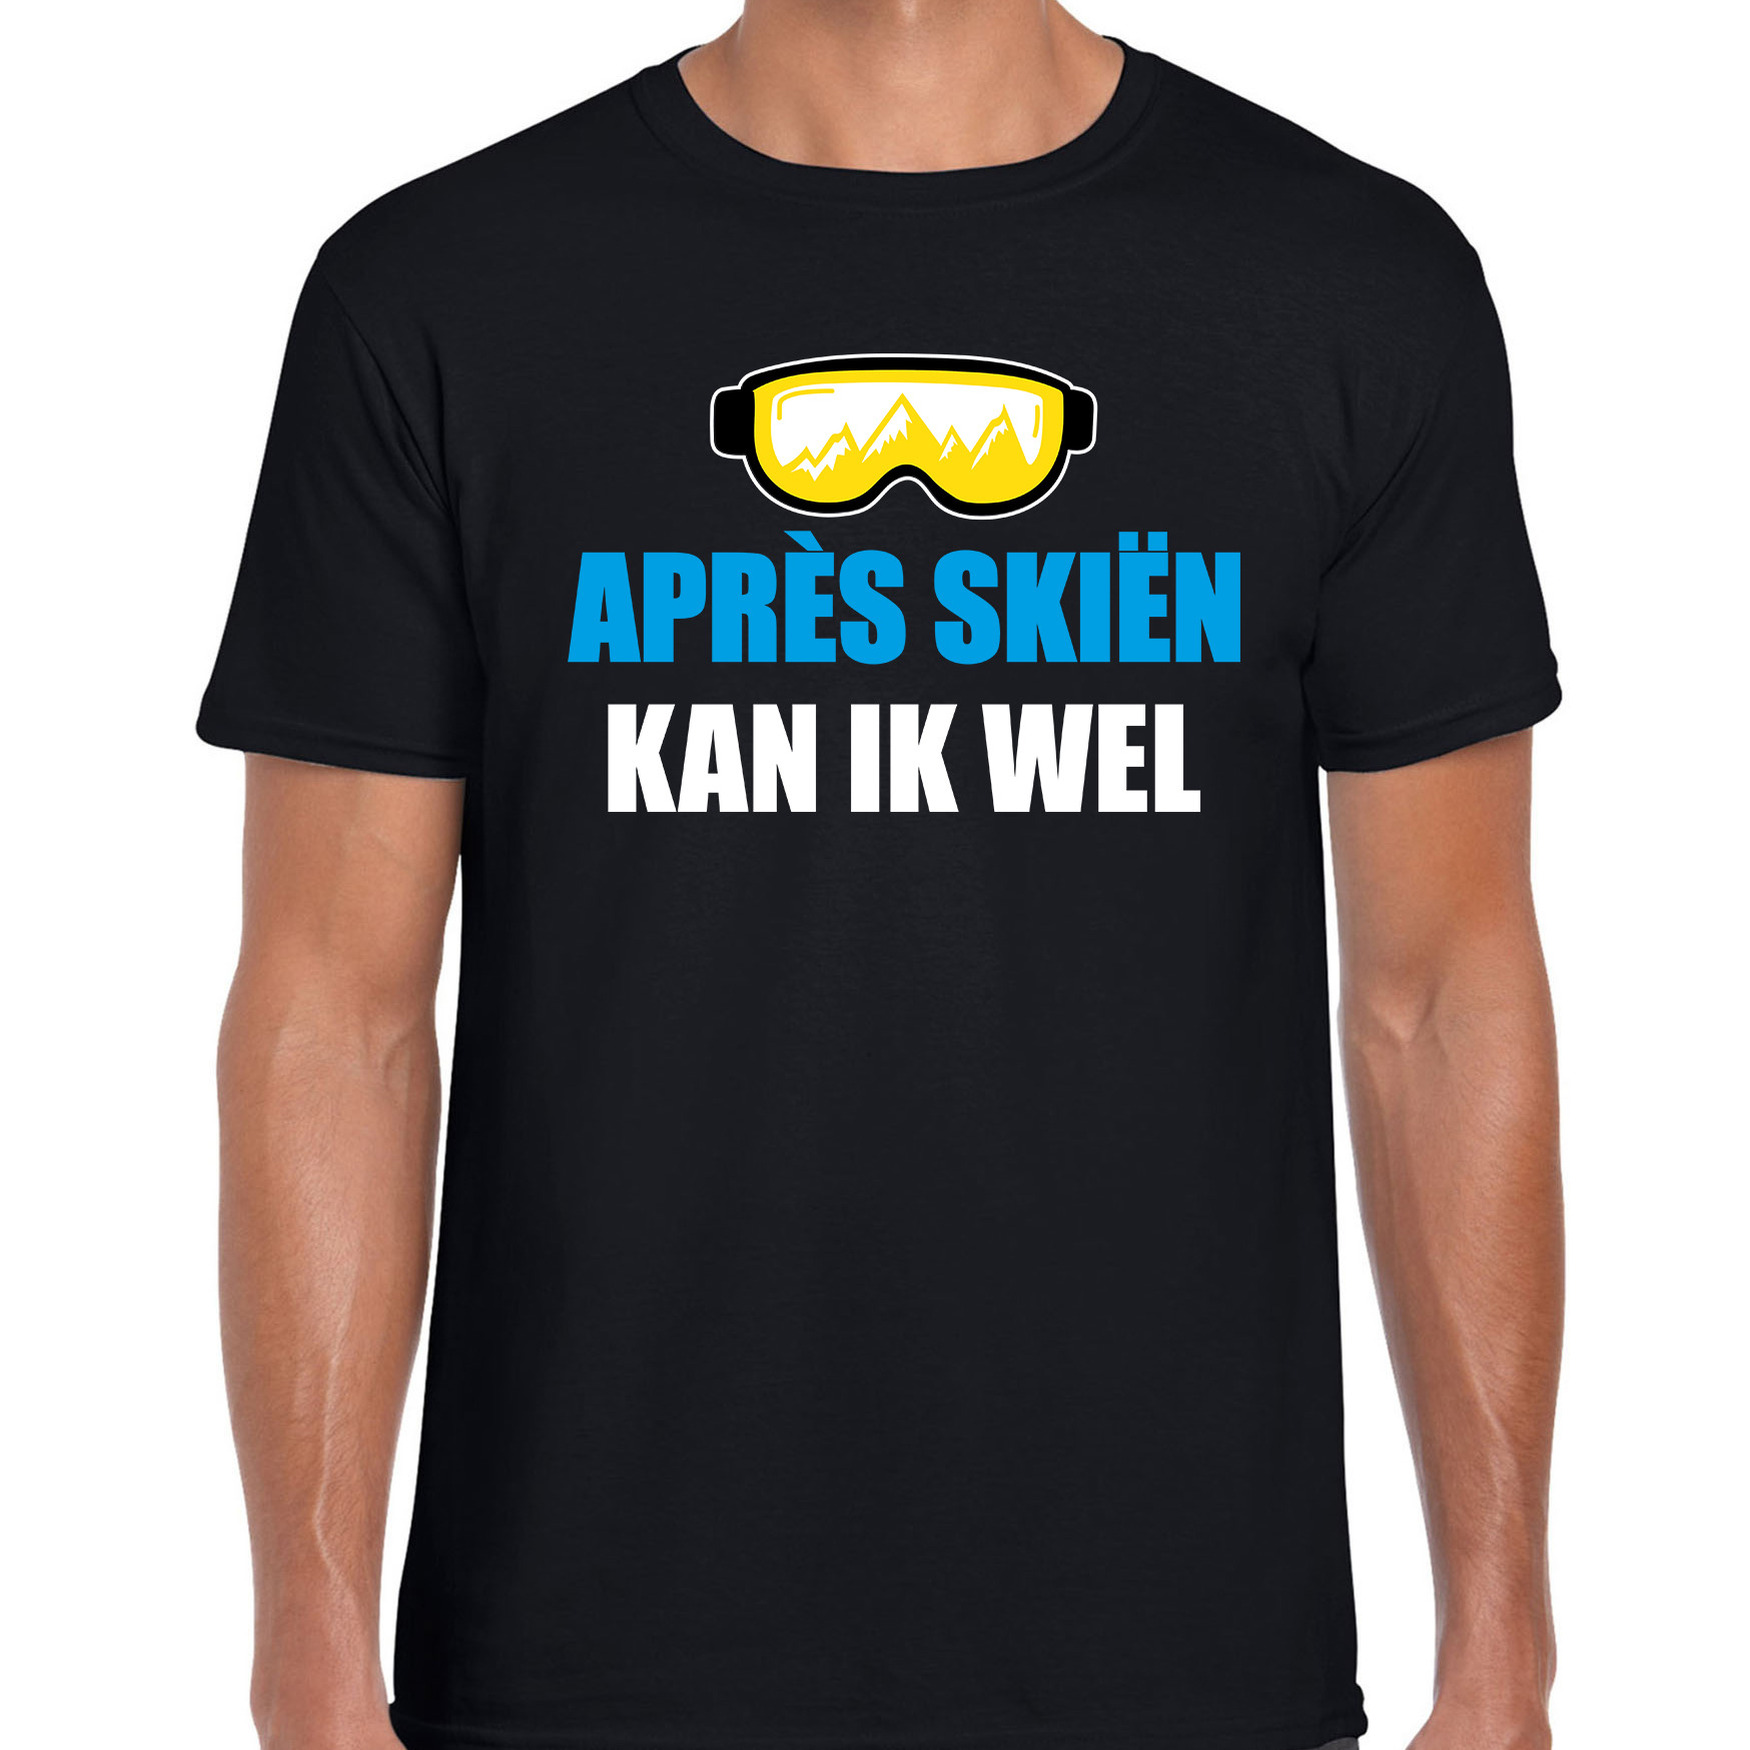 Apres ski t-shirt Apres skieen kan ik wel zwart heren Wintersport shirt Foute apres ski outfit